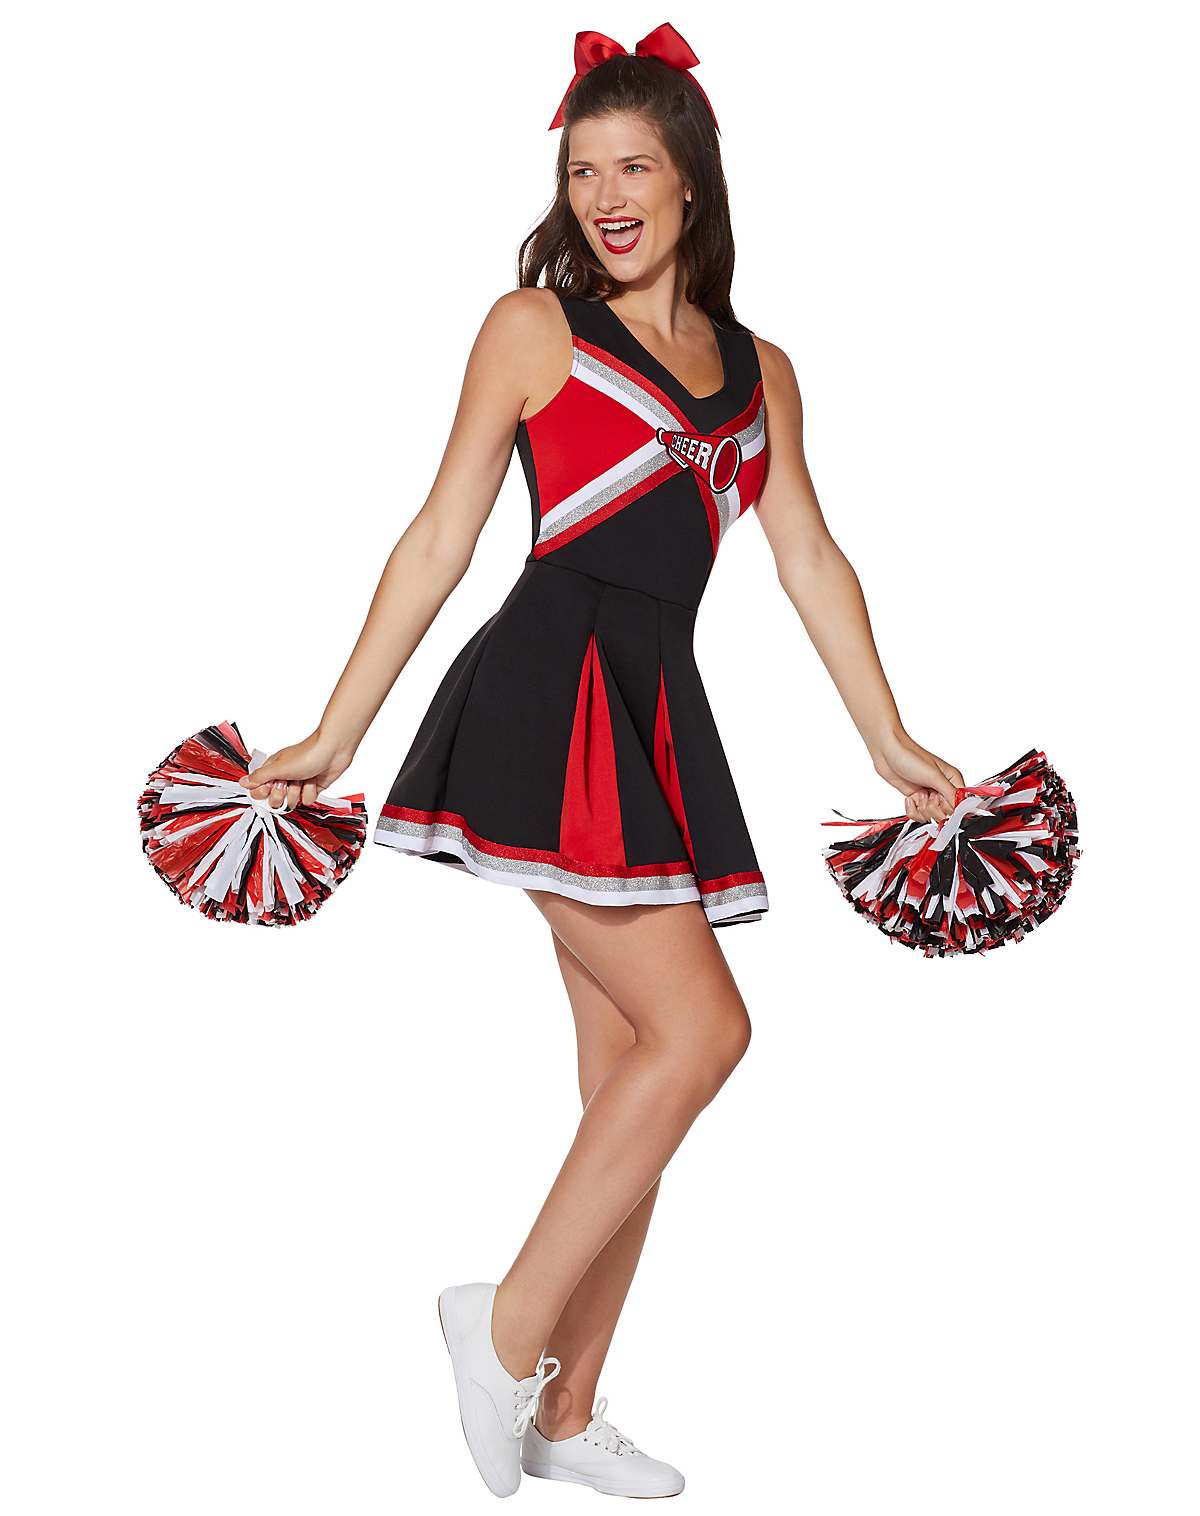 Cheer leader costume